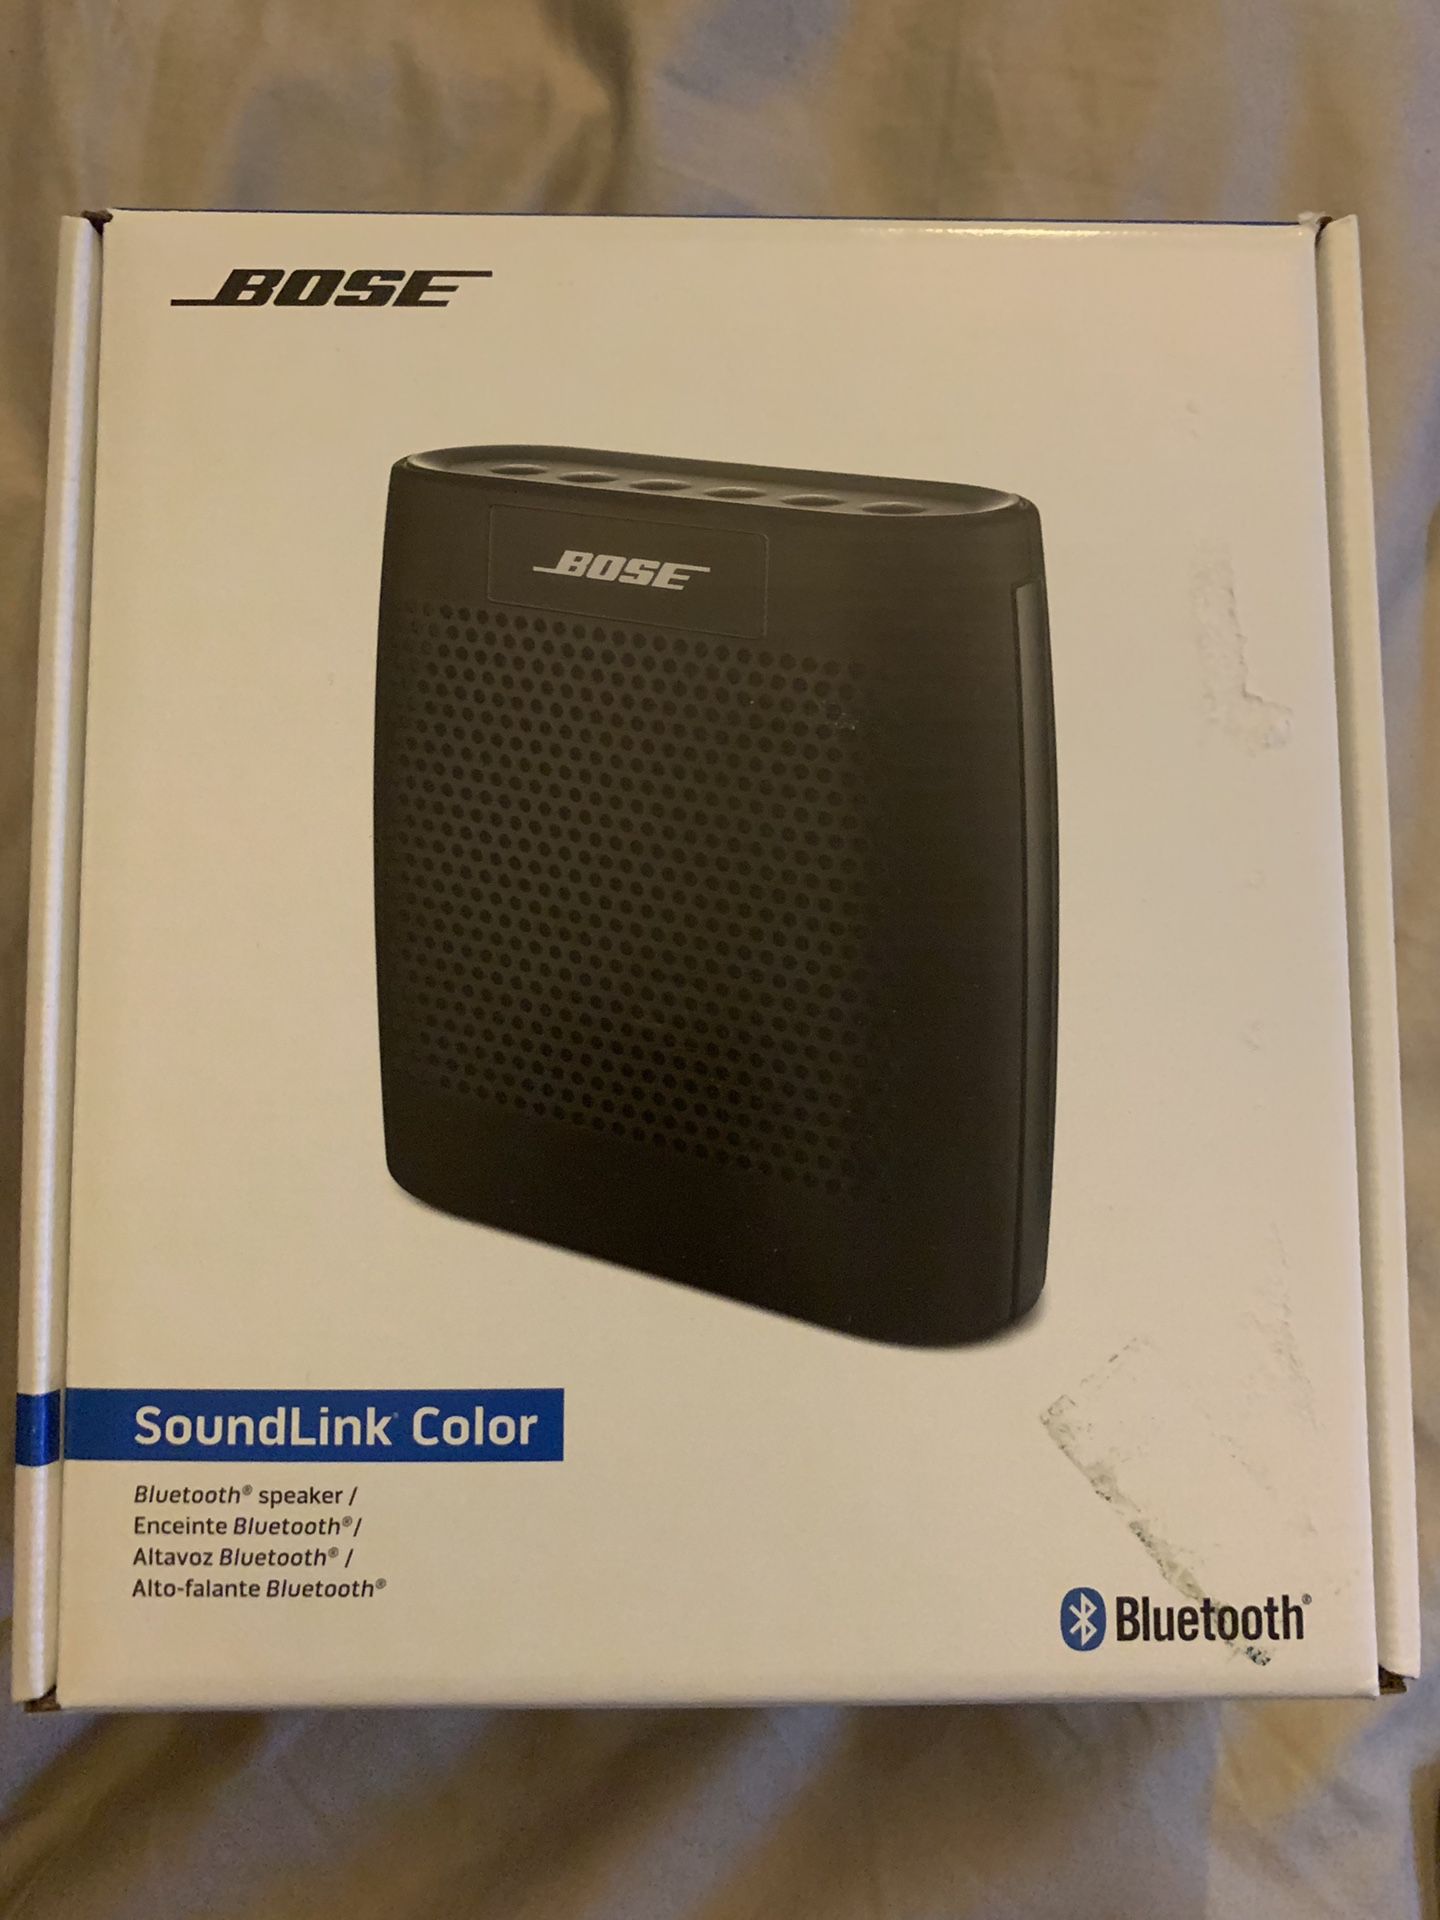 Bose sound link color $130